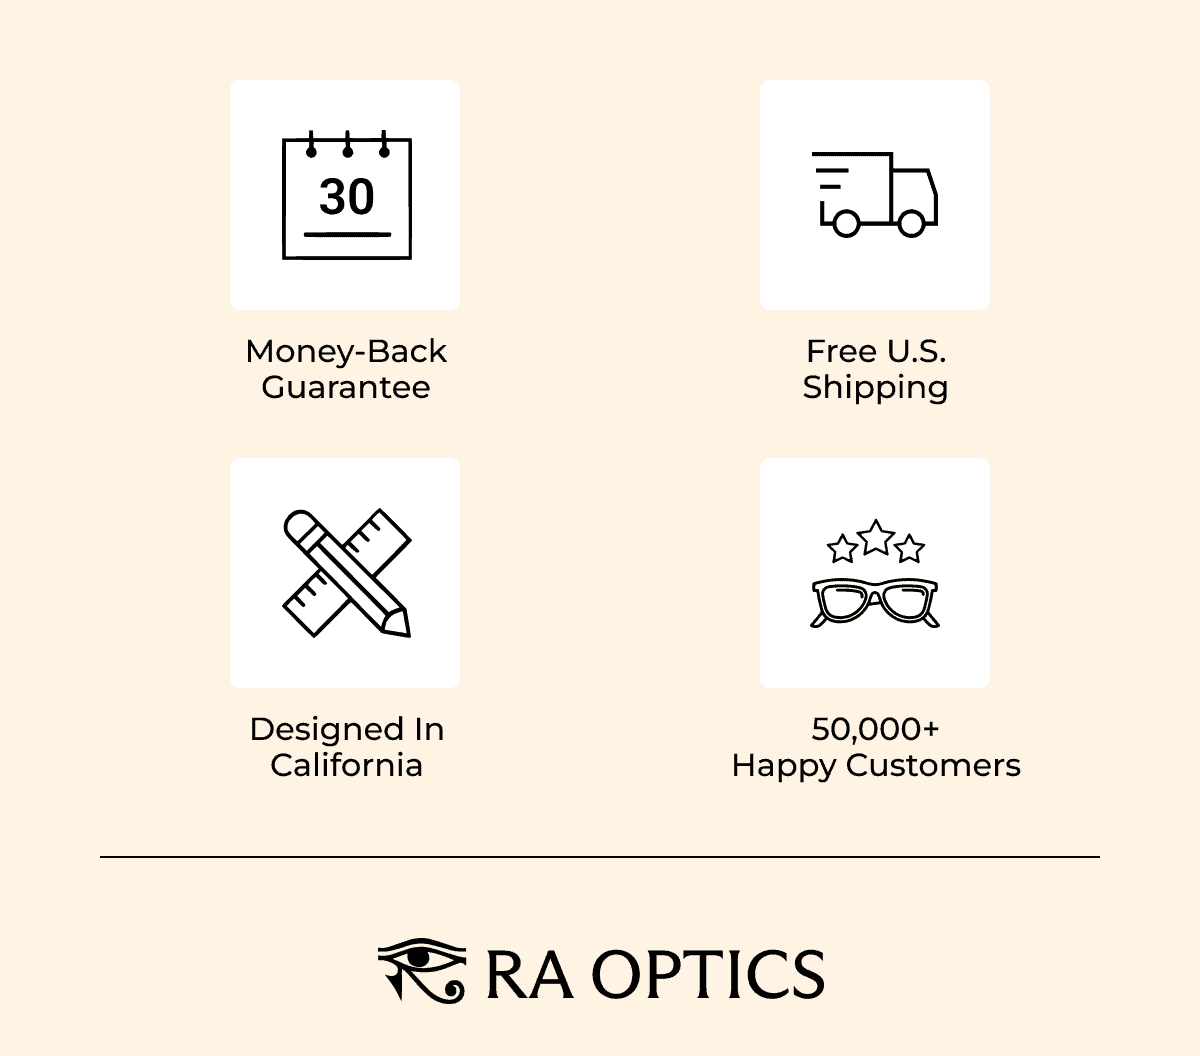 Ra Optics